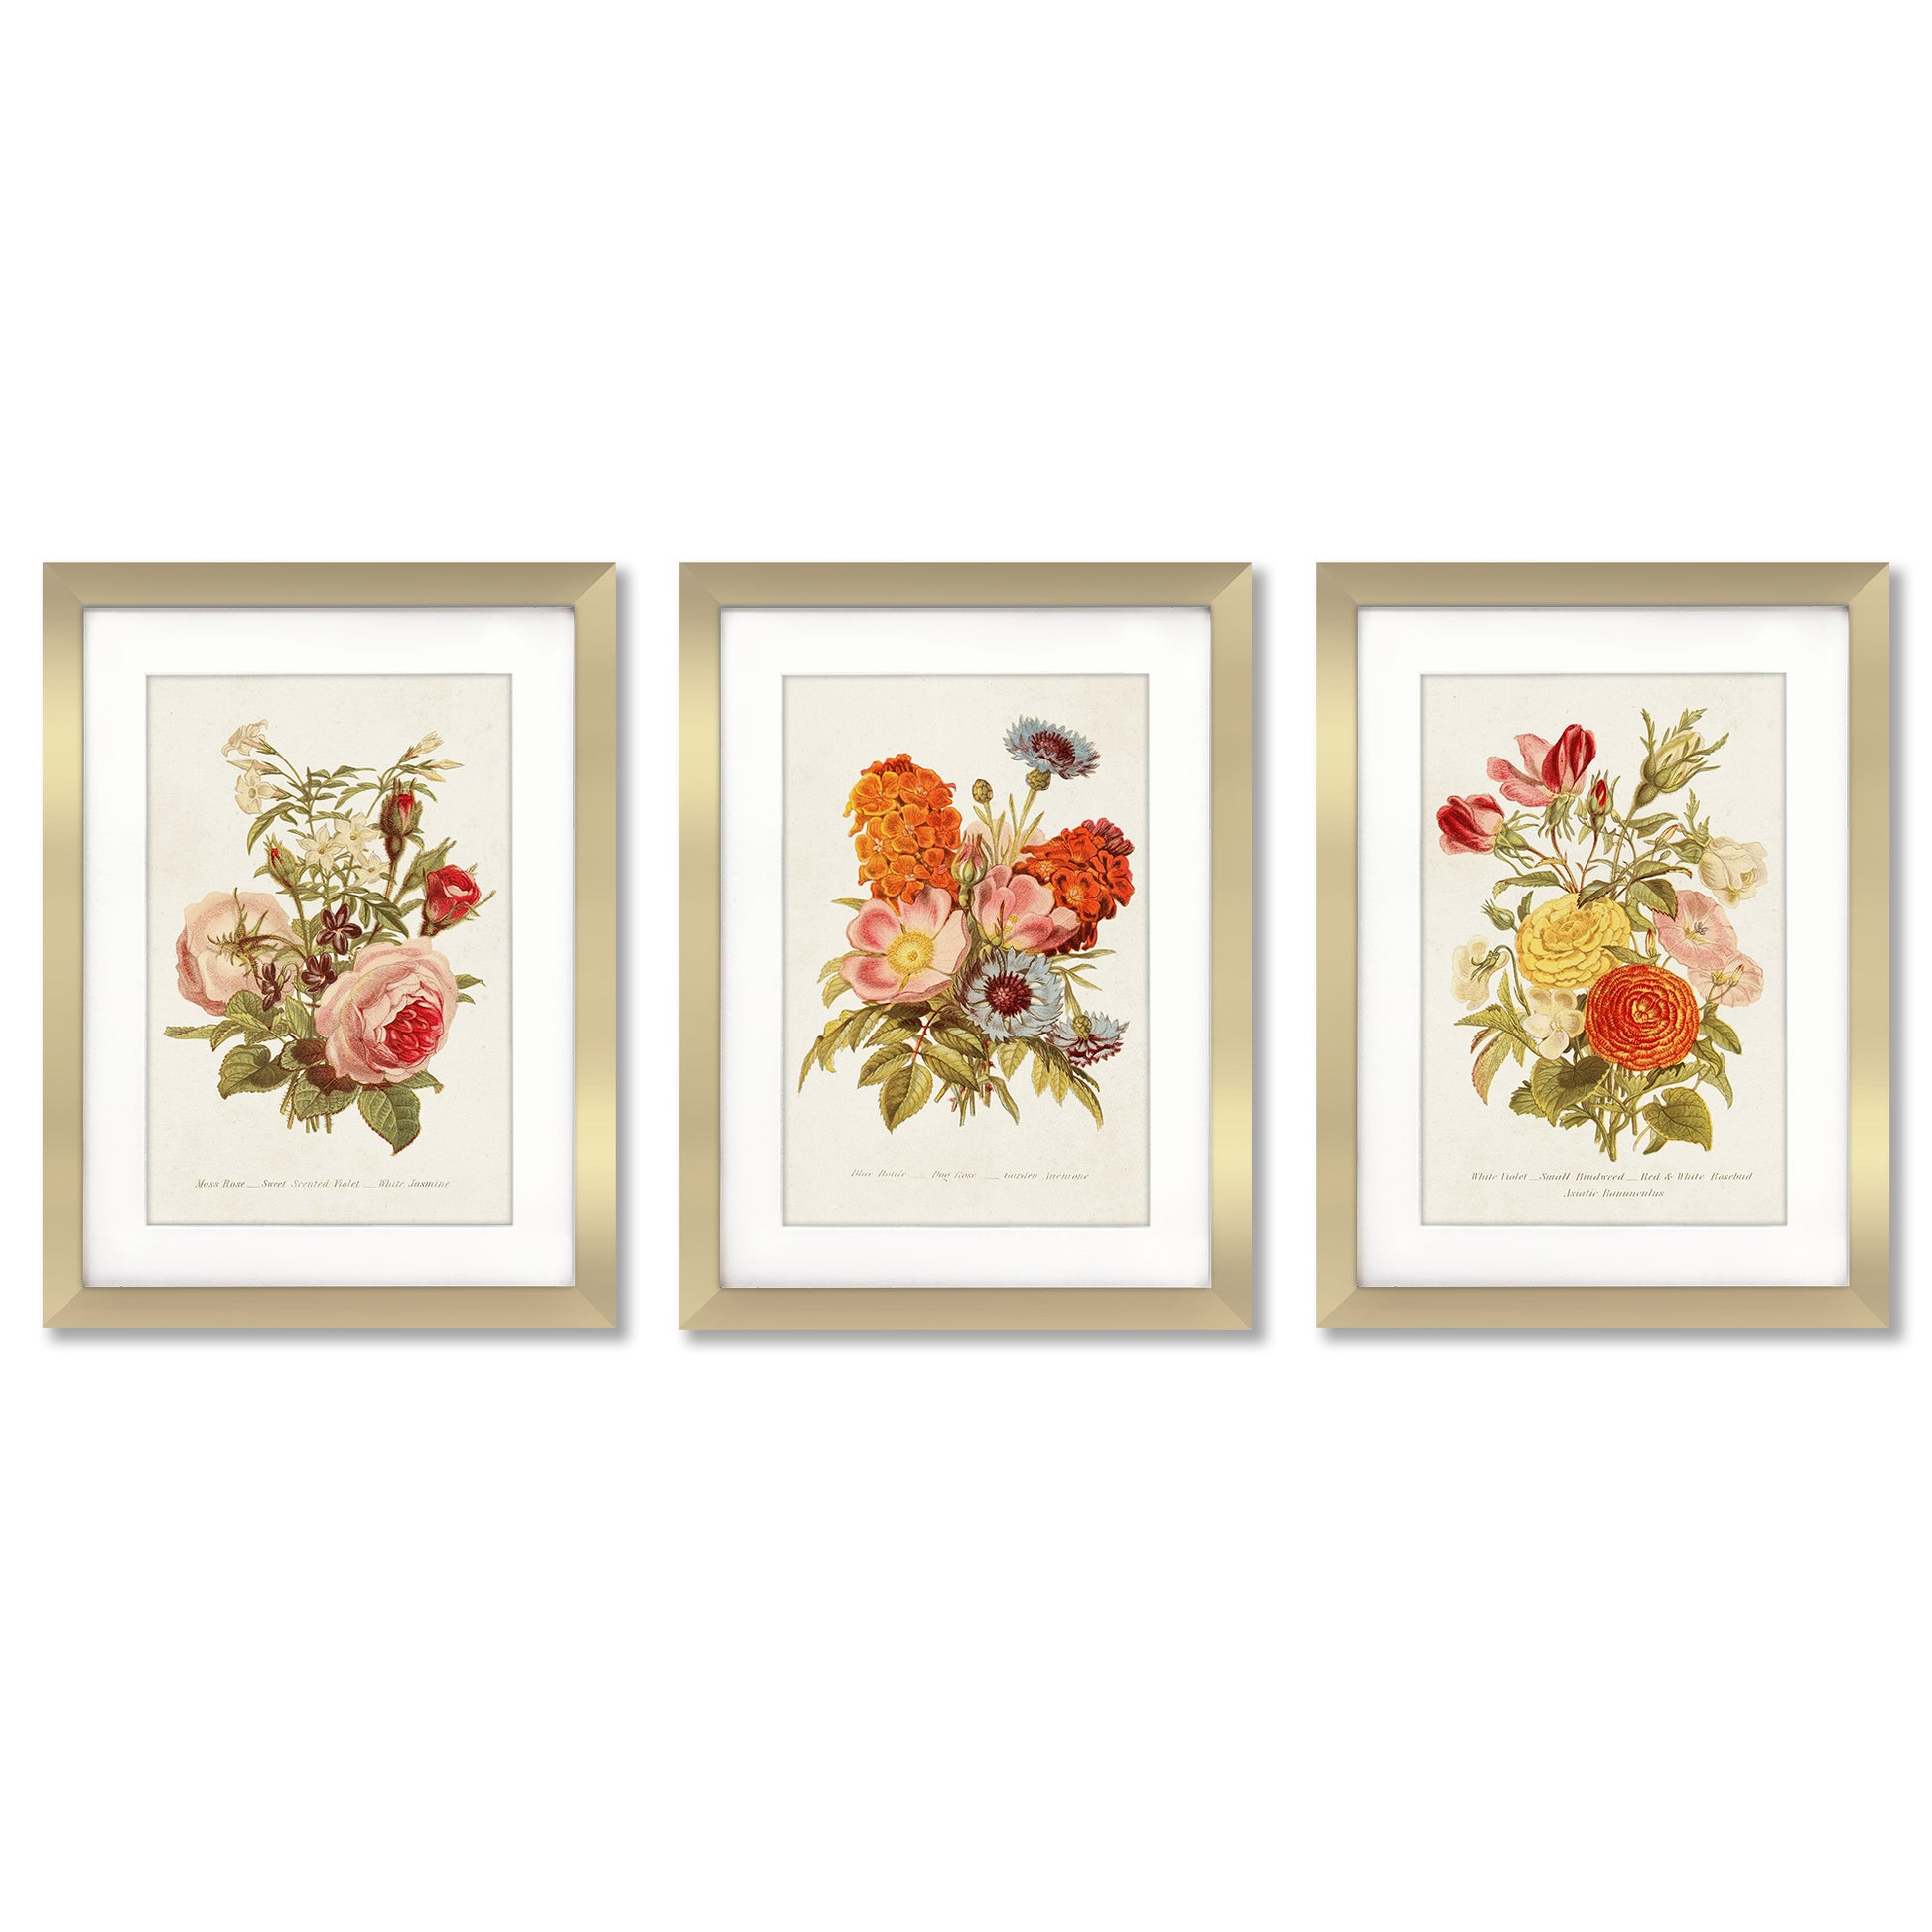 Set Antique Bouquet Floral 3 Art Wall – World Wall Gallery Americanflat Print Framed Group. Set of Art